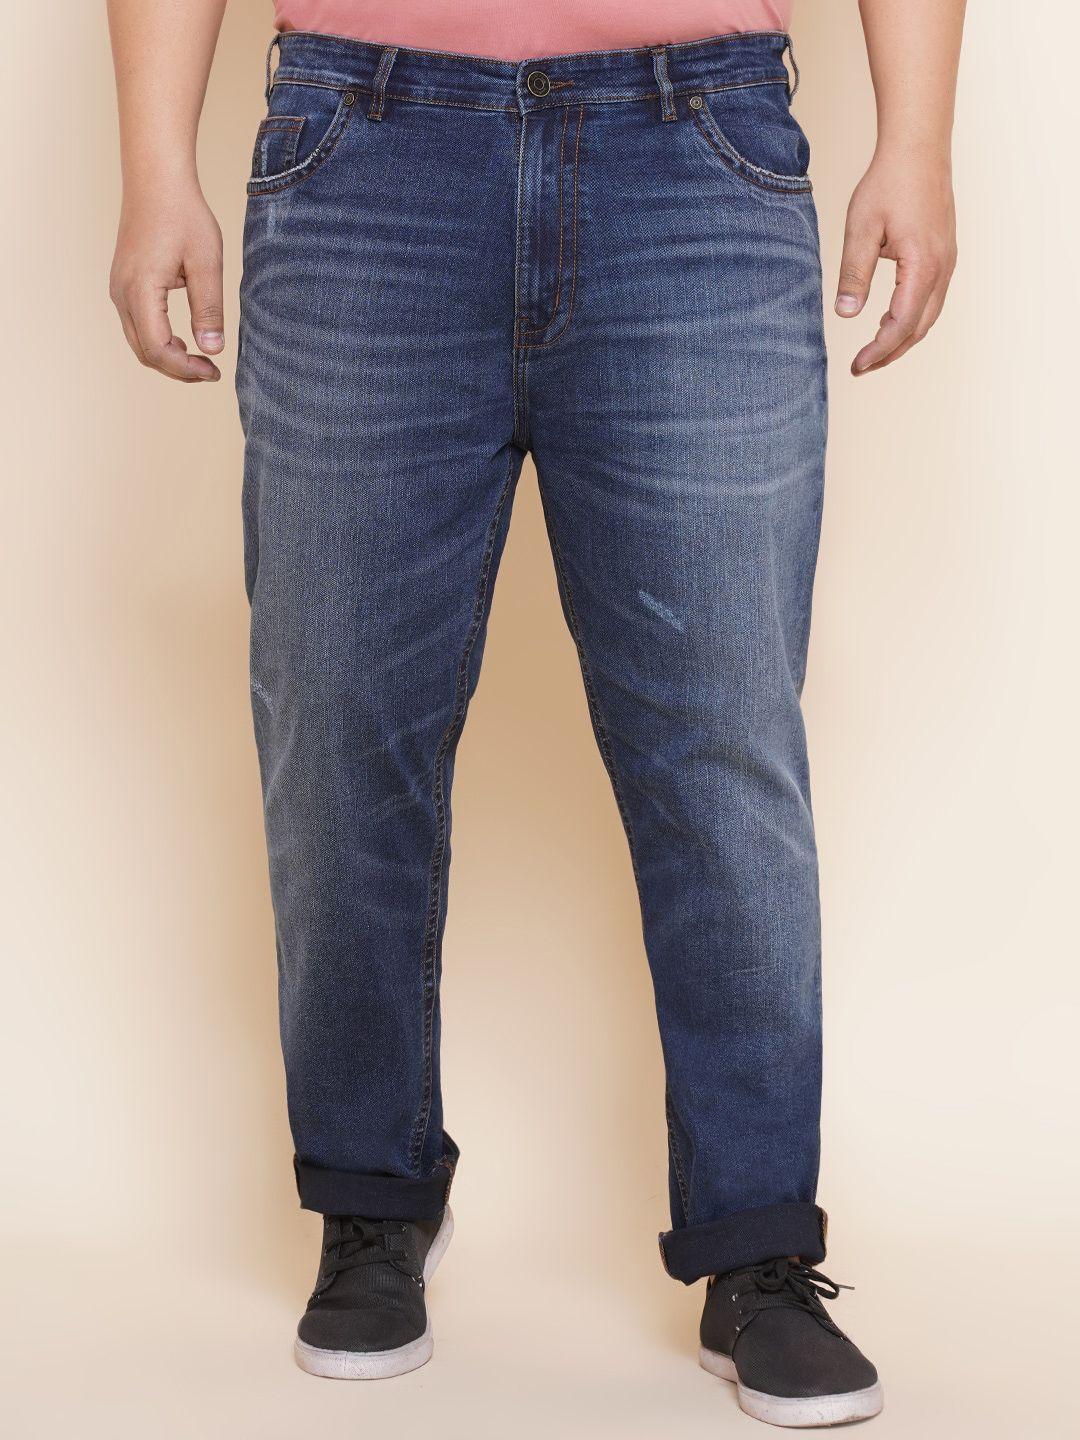 john pride men plus size regular fit low distress light fade stretchable jeans